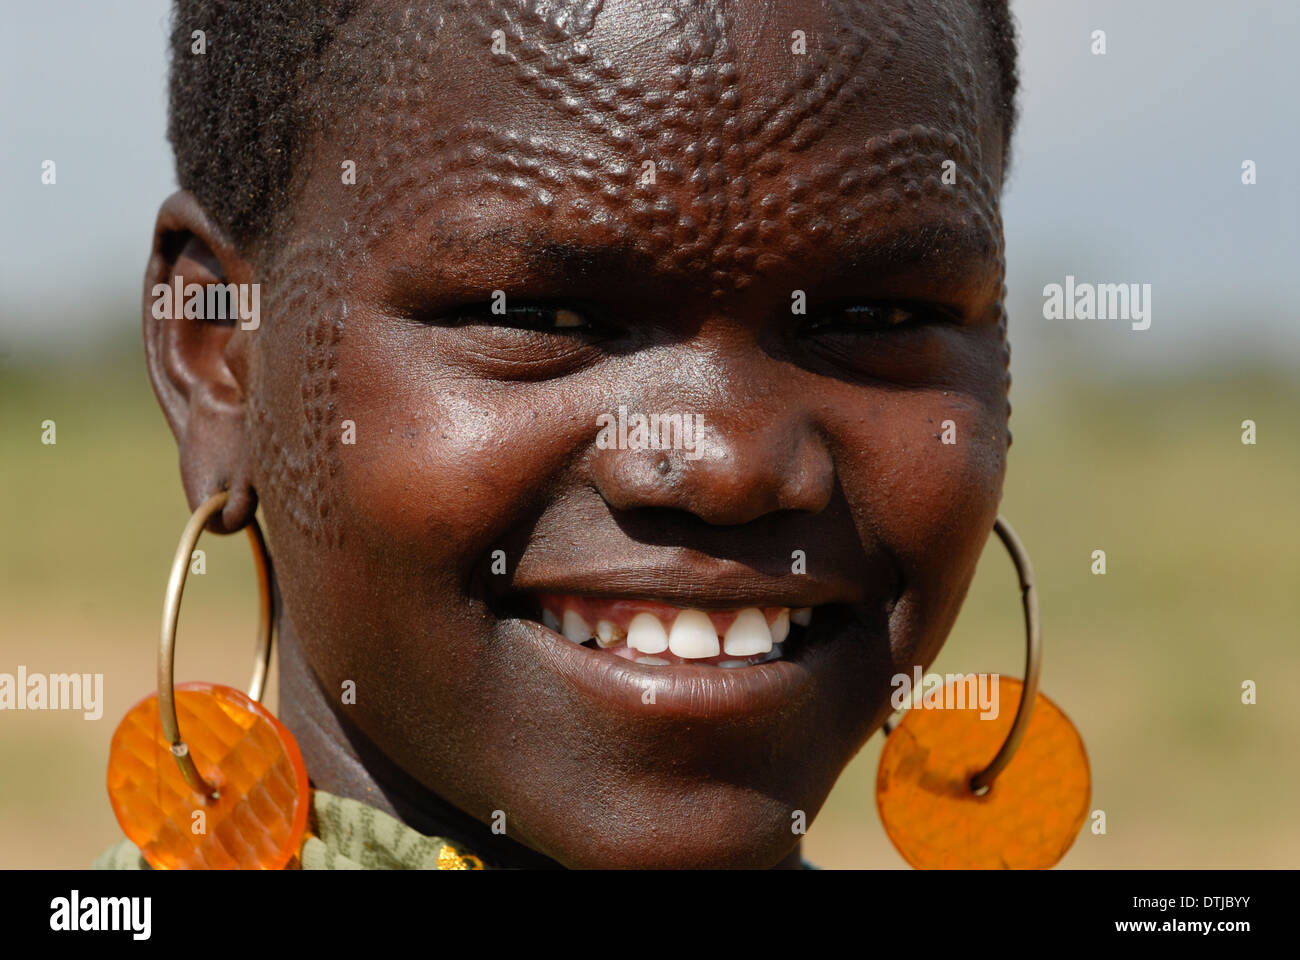 Uganda Karamoja Kotido, Karimojong people, pastoral tribe, woman with face scarification and car blinking light earrings Stock Photo